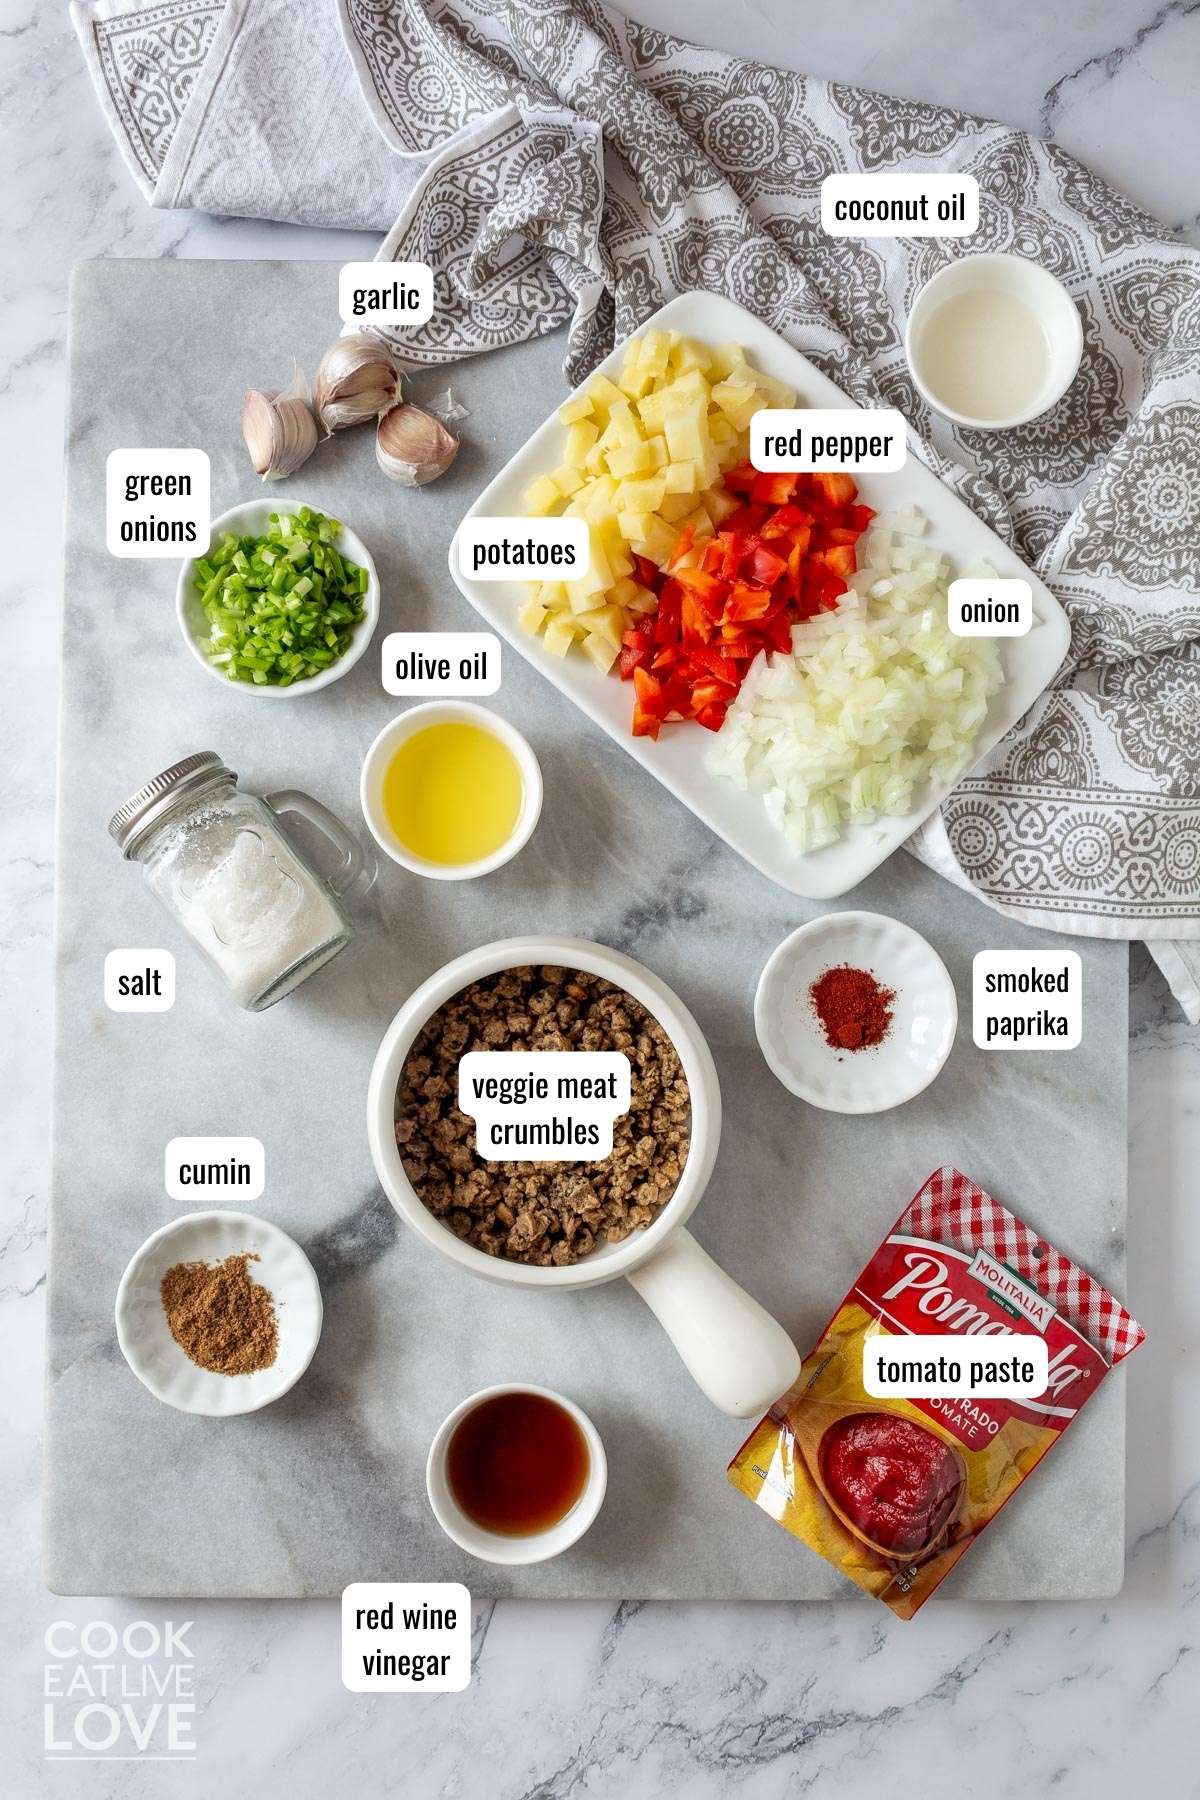 Ingredients to make vegan empanadas on the table before making the recipe.